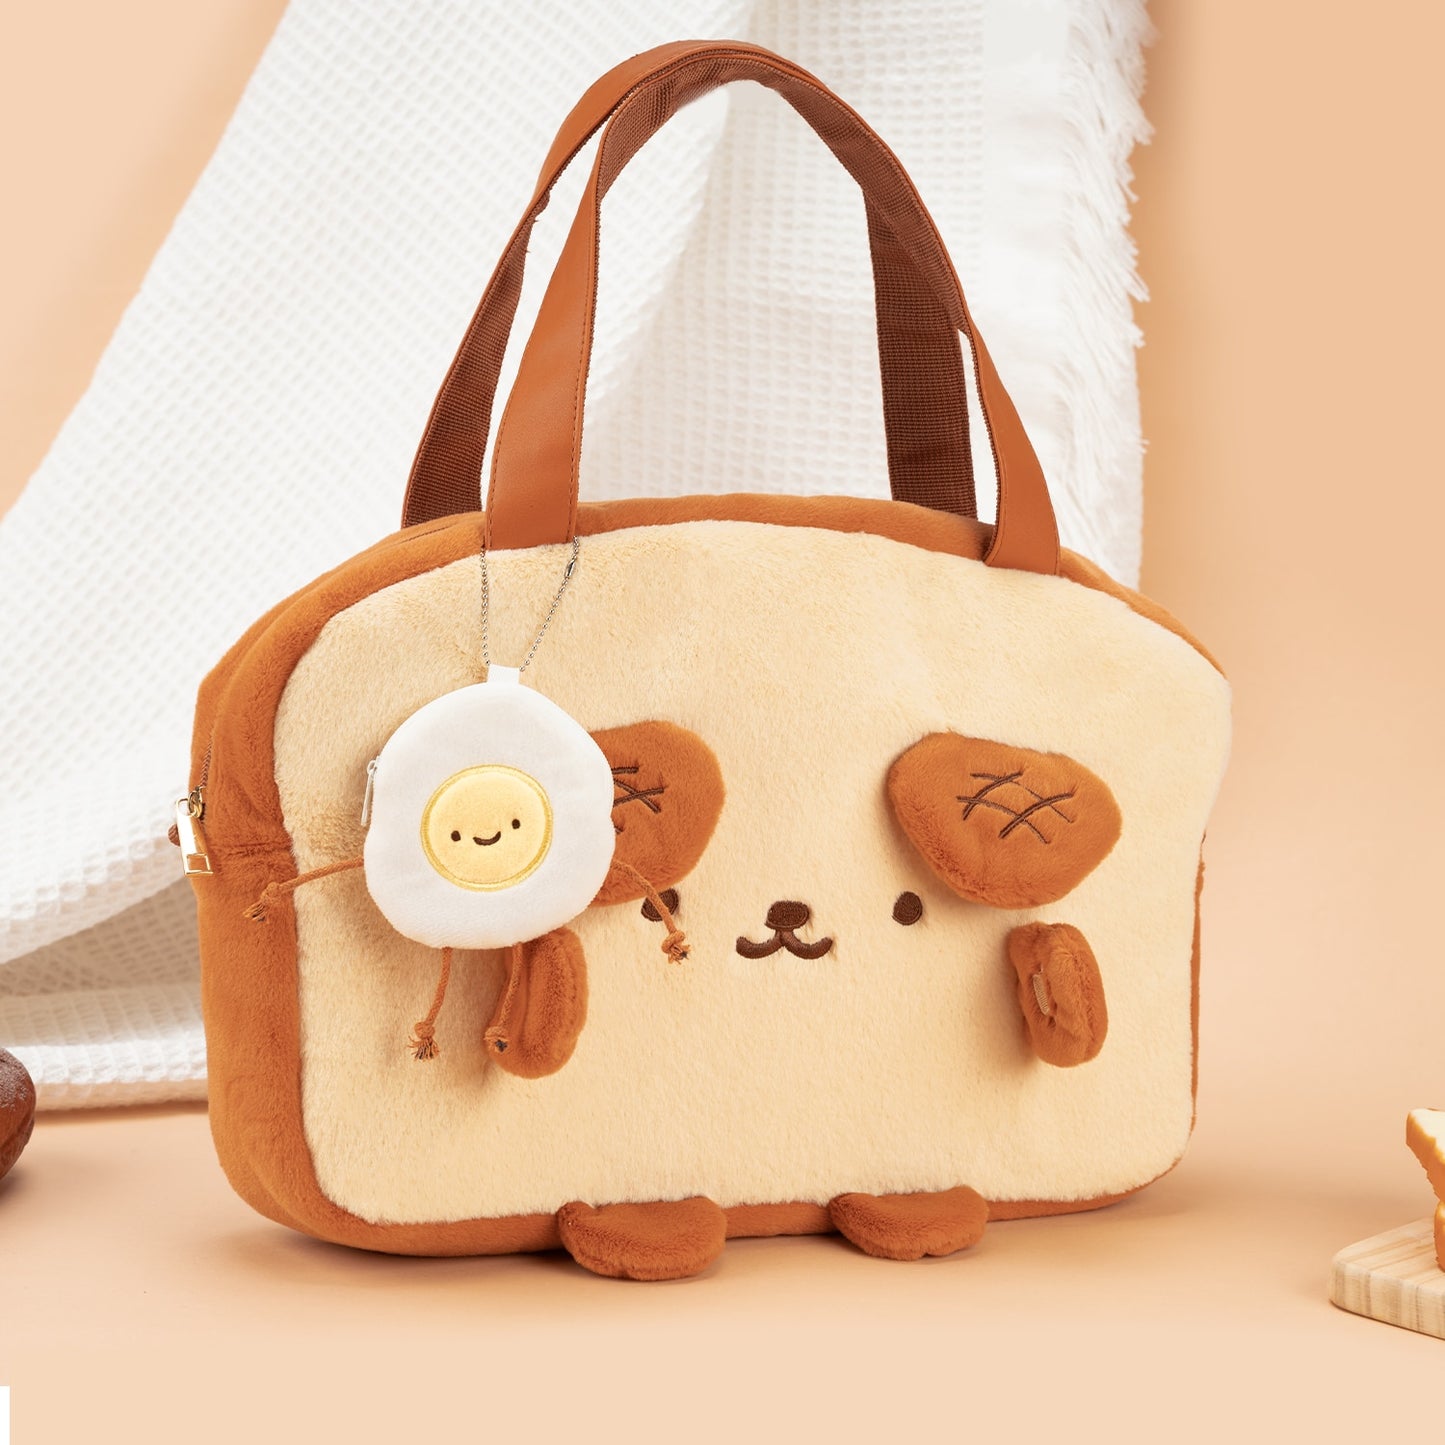 Kawaii Breakfast Puppy Bag With Kawaii Sunny Side Up Egg Charm